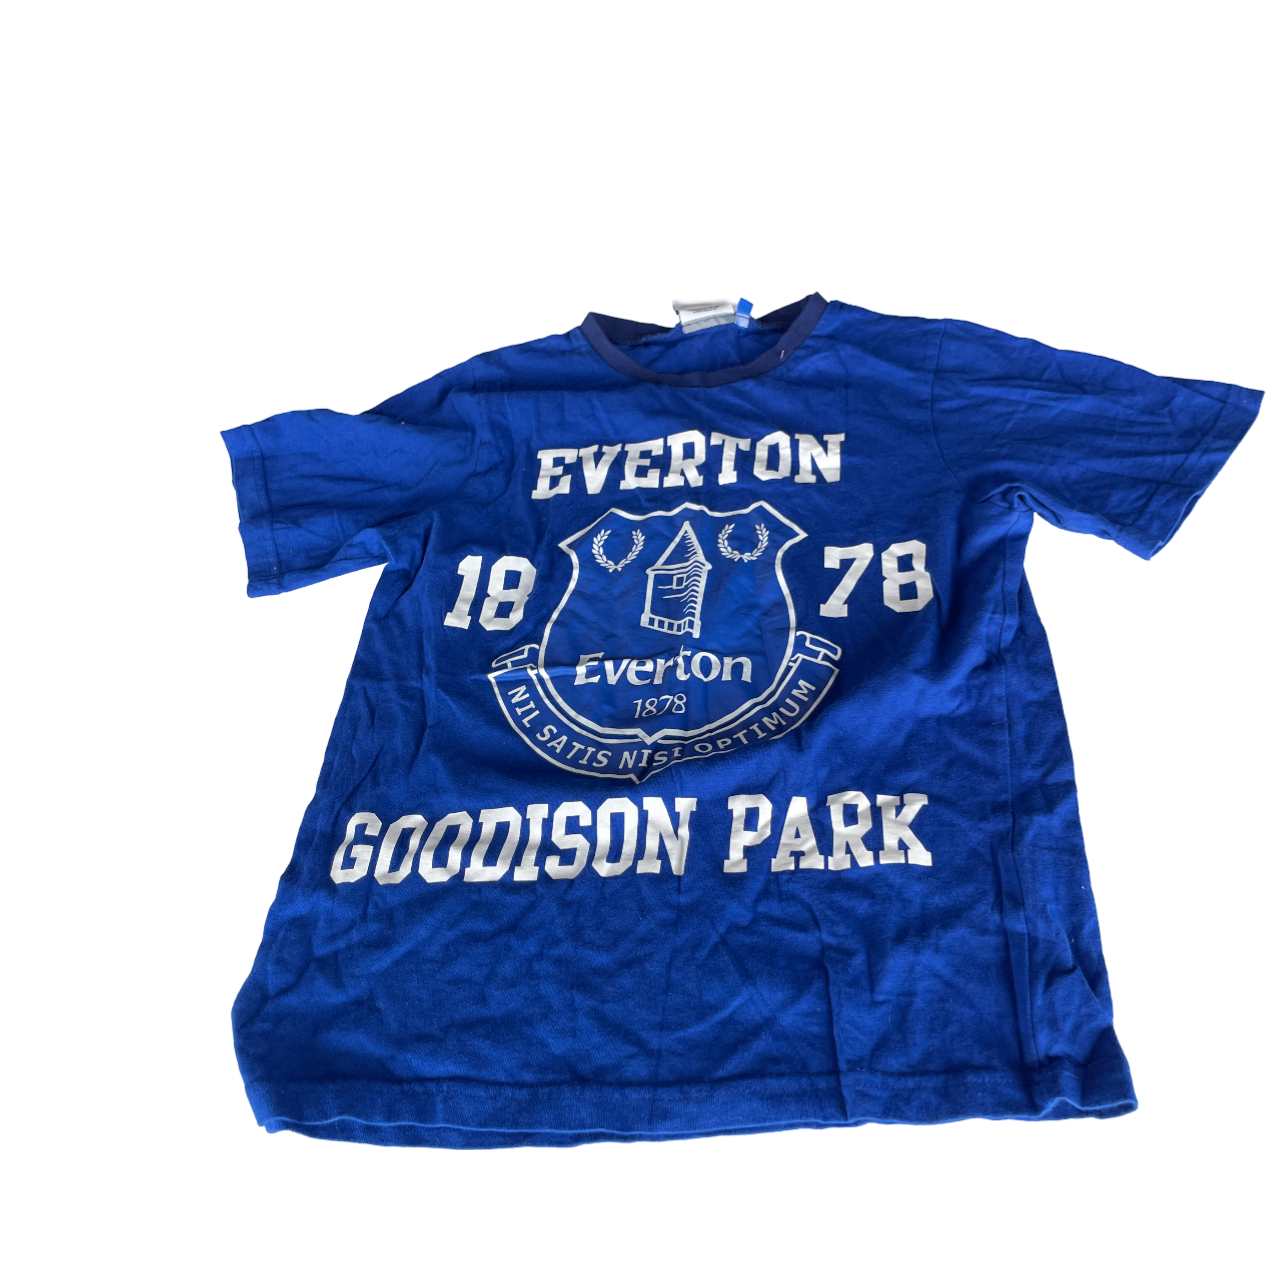  Women Everton Shirt Tshirt FC EPL Football Club Blue Cotton Blend Soccer Youth SIZE S/M L 25 W 15 SKU 5199